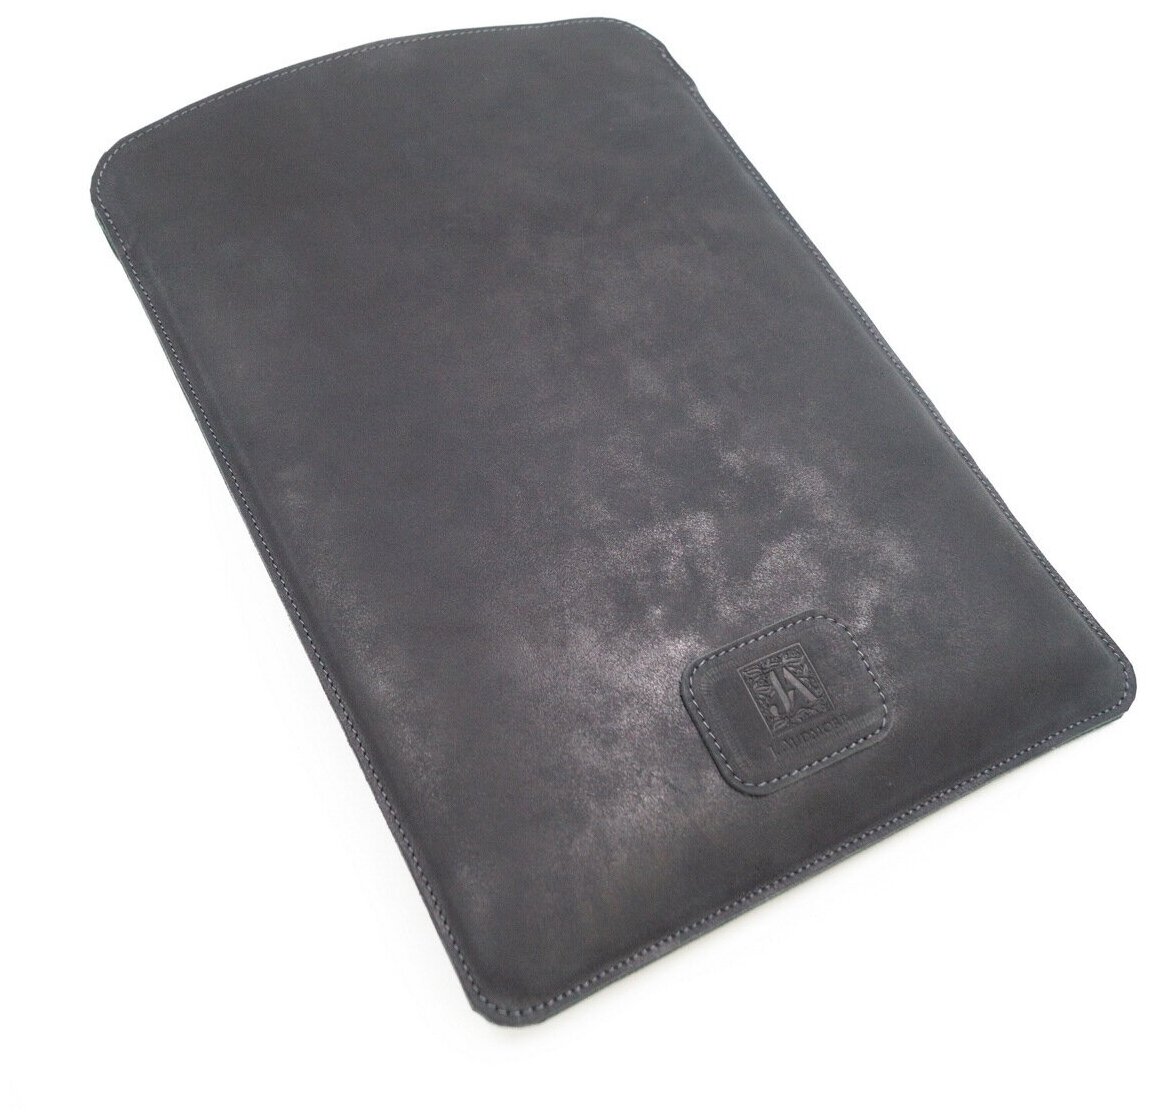 Кожаный чехол - карман J.Audmorr для Macbook 13 Air/Pro / ноутбука 13-13.3", с размерами до 315 х 212 х 16 мм, черный, NewBridge 13 Coal